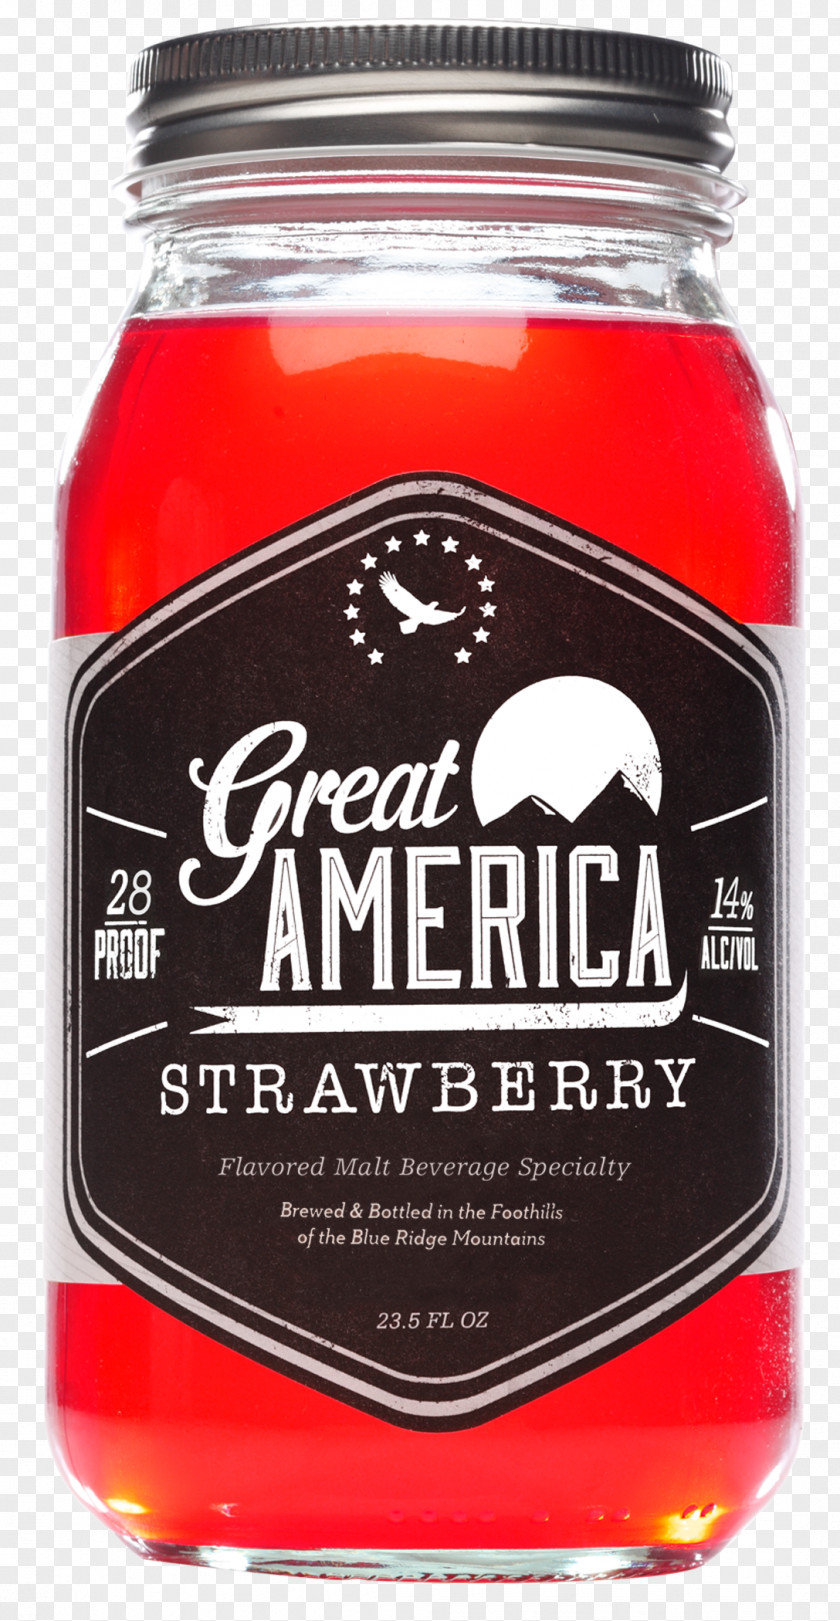 Strawberry Flavor Liquor Jam Product Fluid Ounce PNG